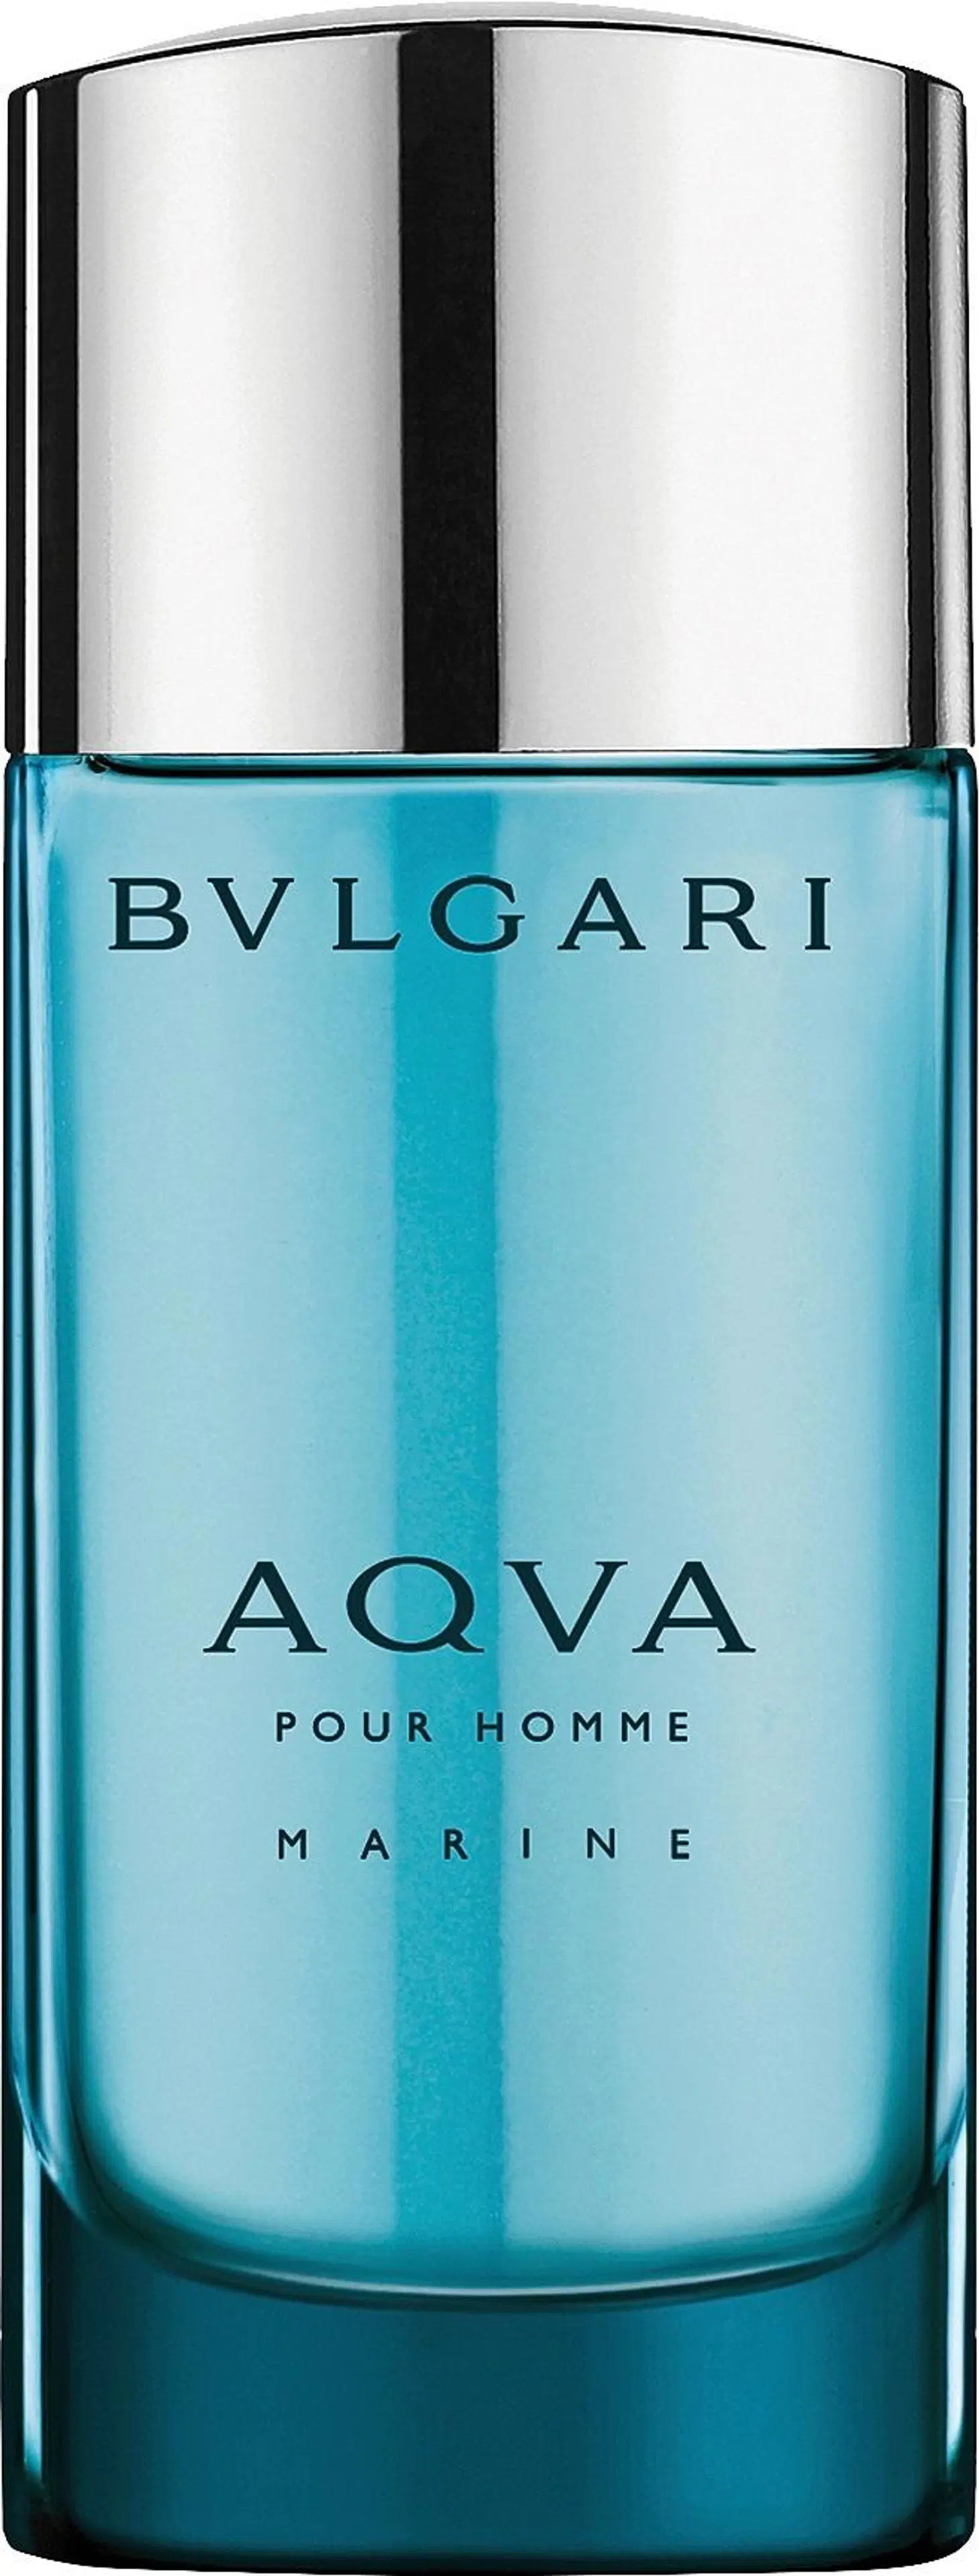 Bvlgari Aqua Marine EdT miesten tuoksu 30 ml